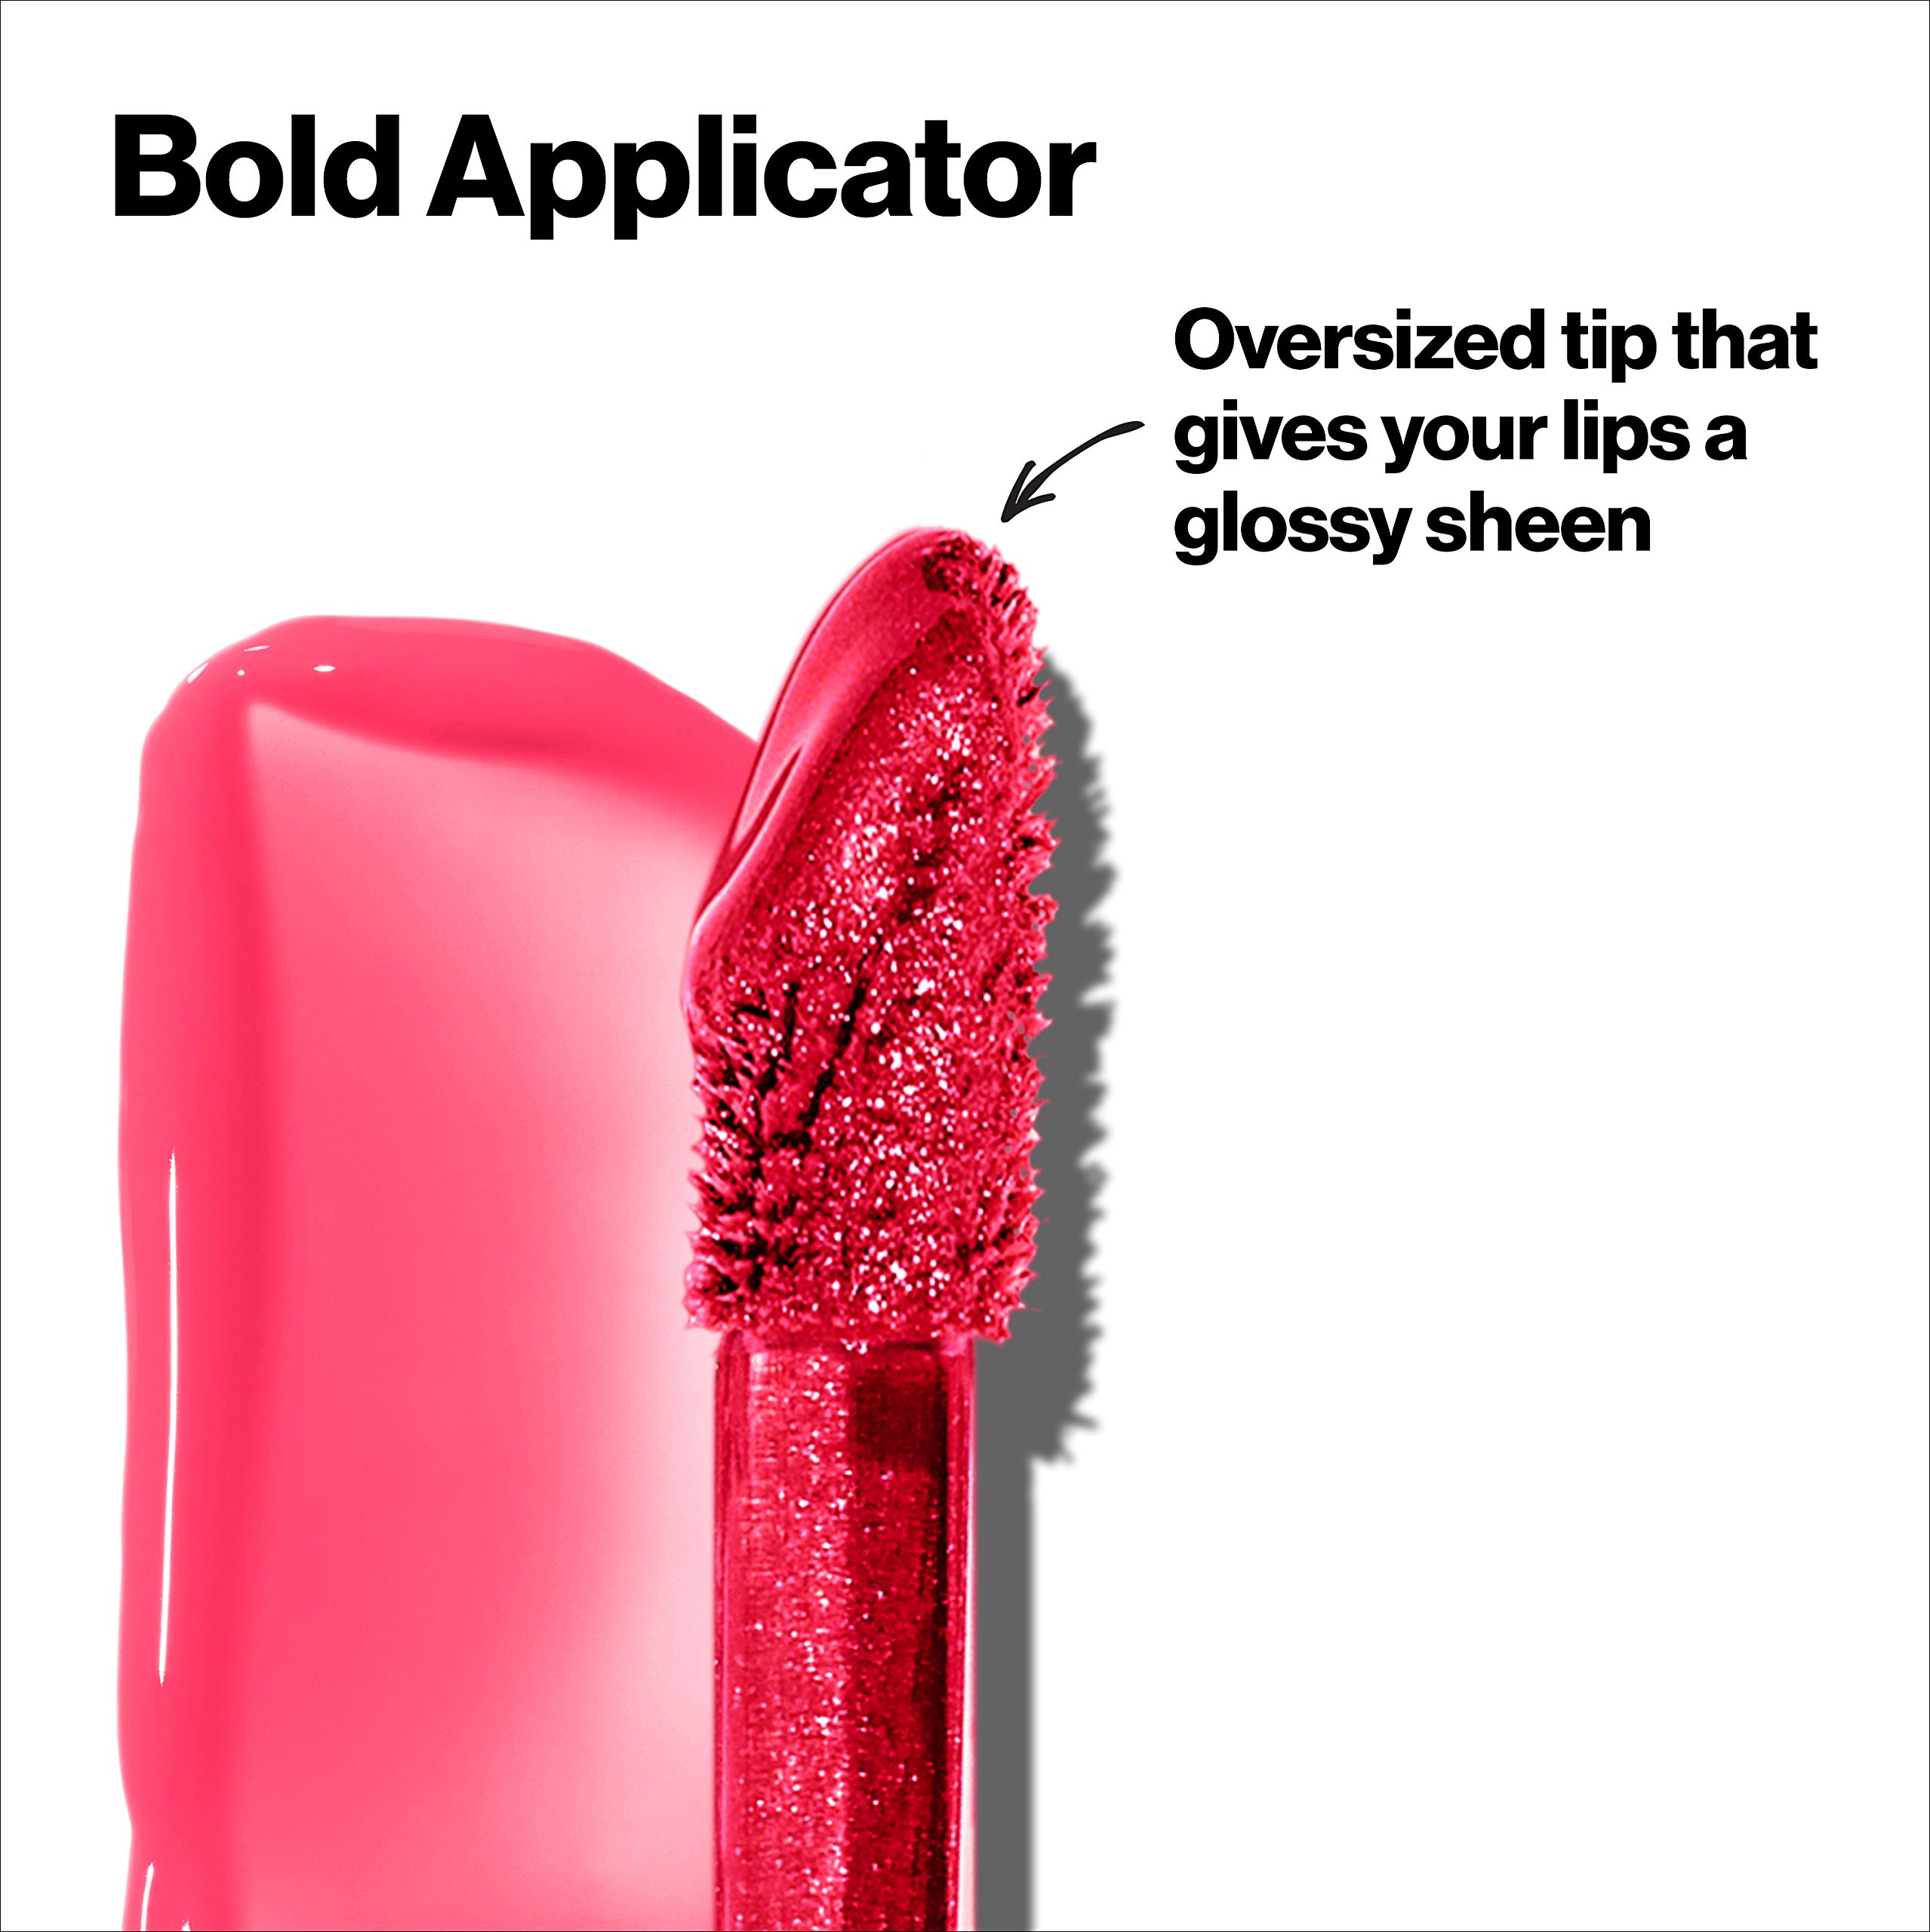 Revlon Lip Gloss, Super Lustrous The Gloss, Non-Sticky, High Shine Finish, 215 Super Natural